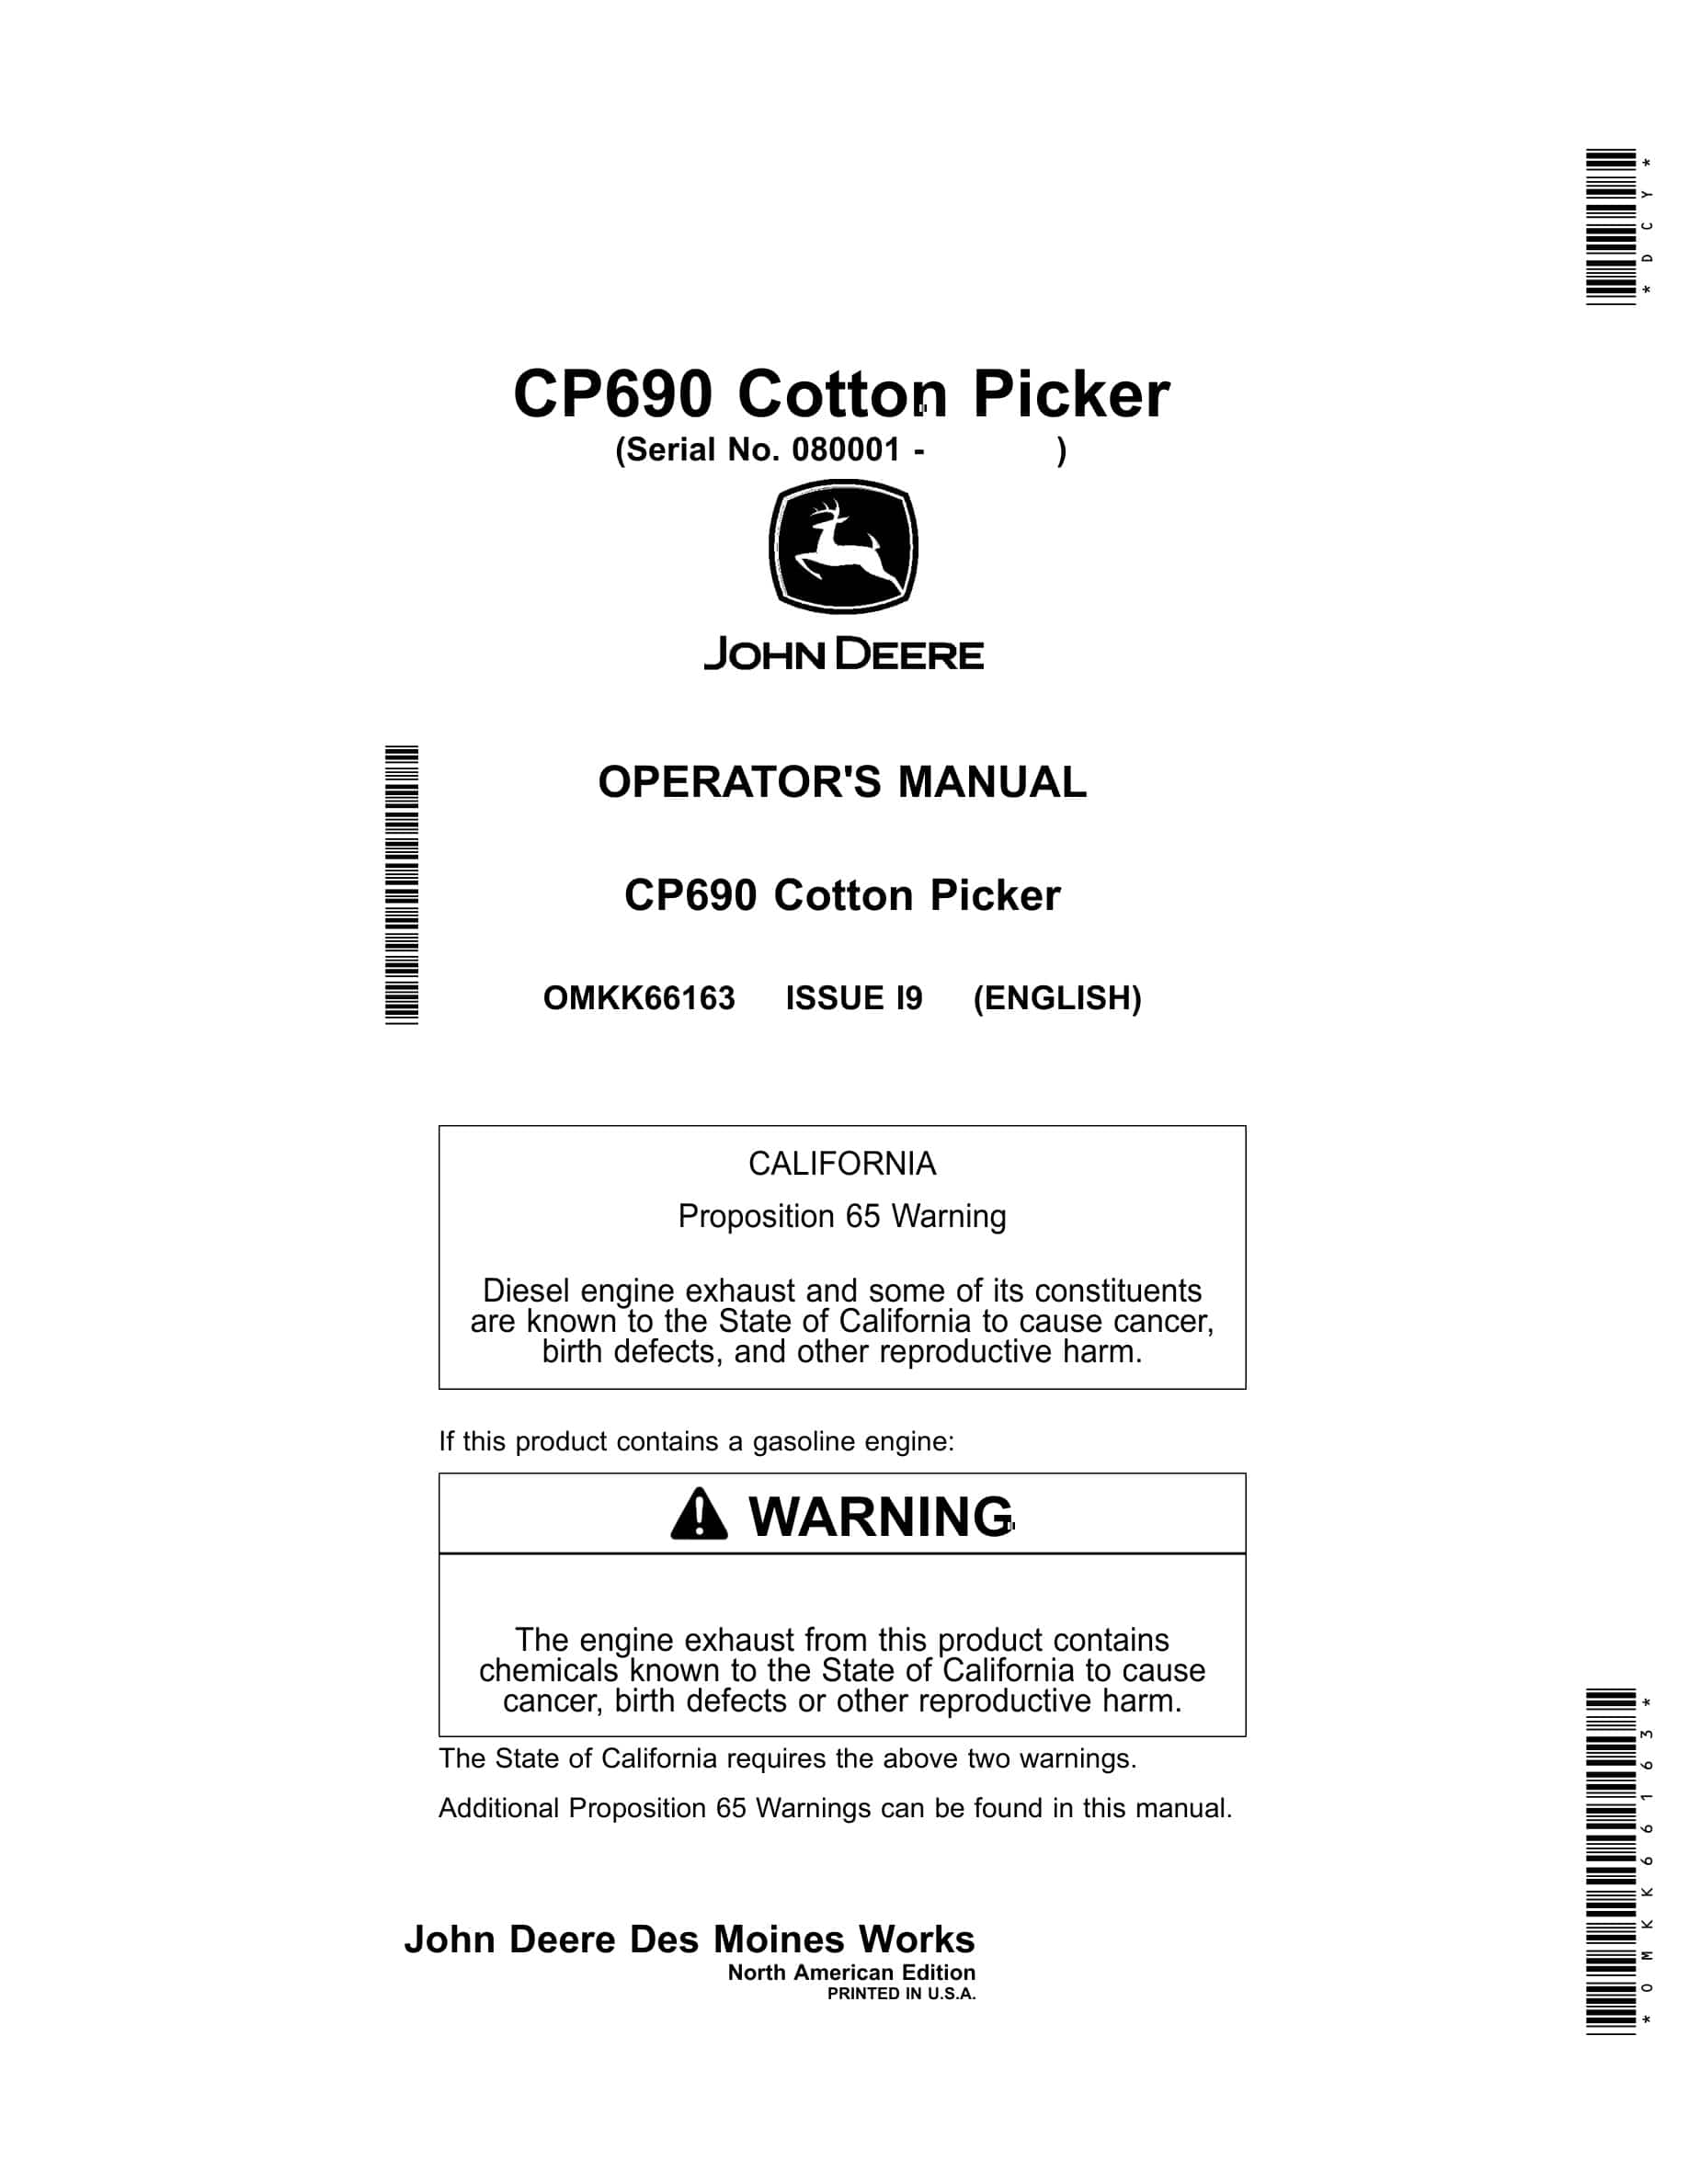 John Deere CP690 Cotton Picker Operator Manual OMKK66163-1